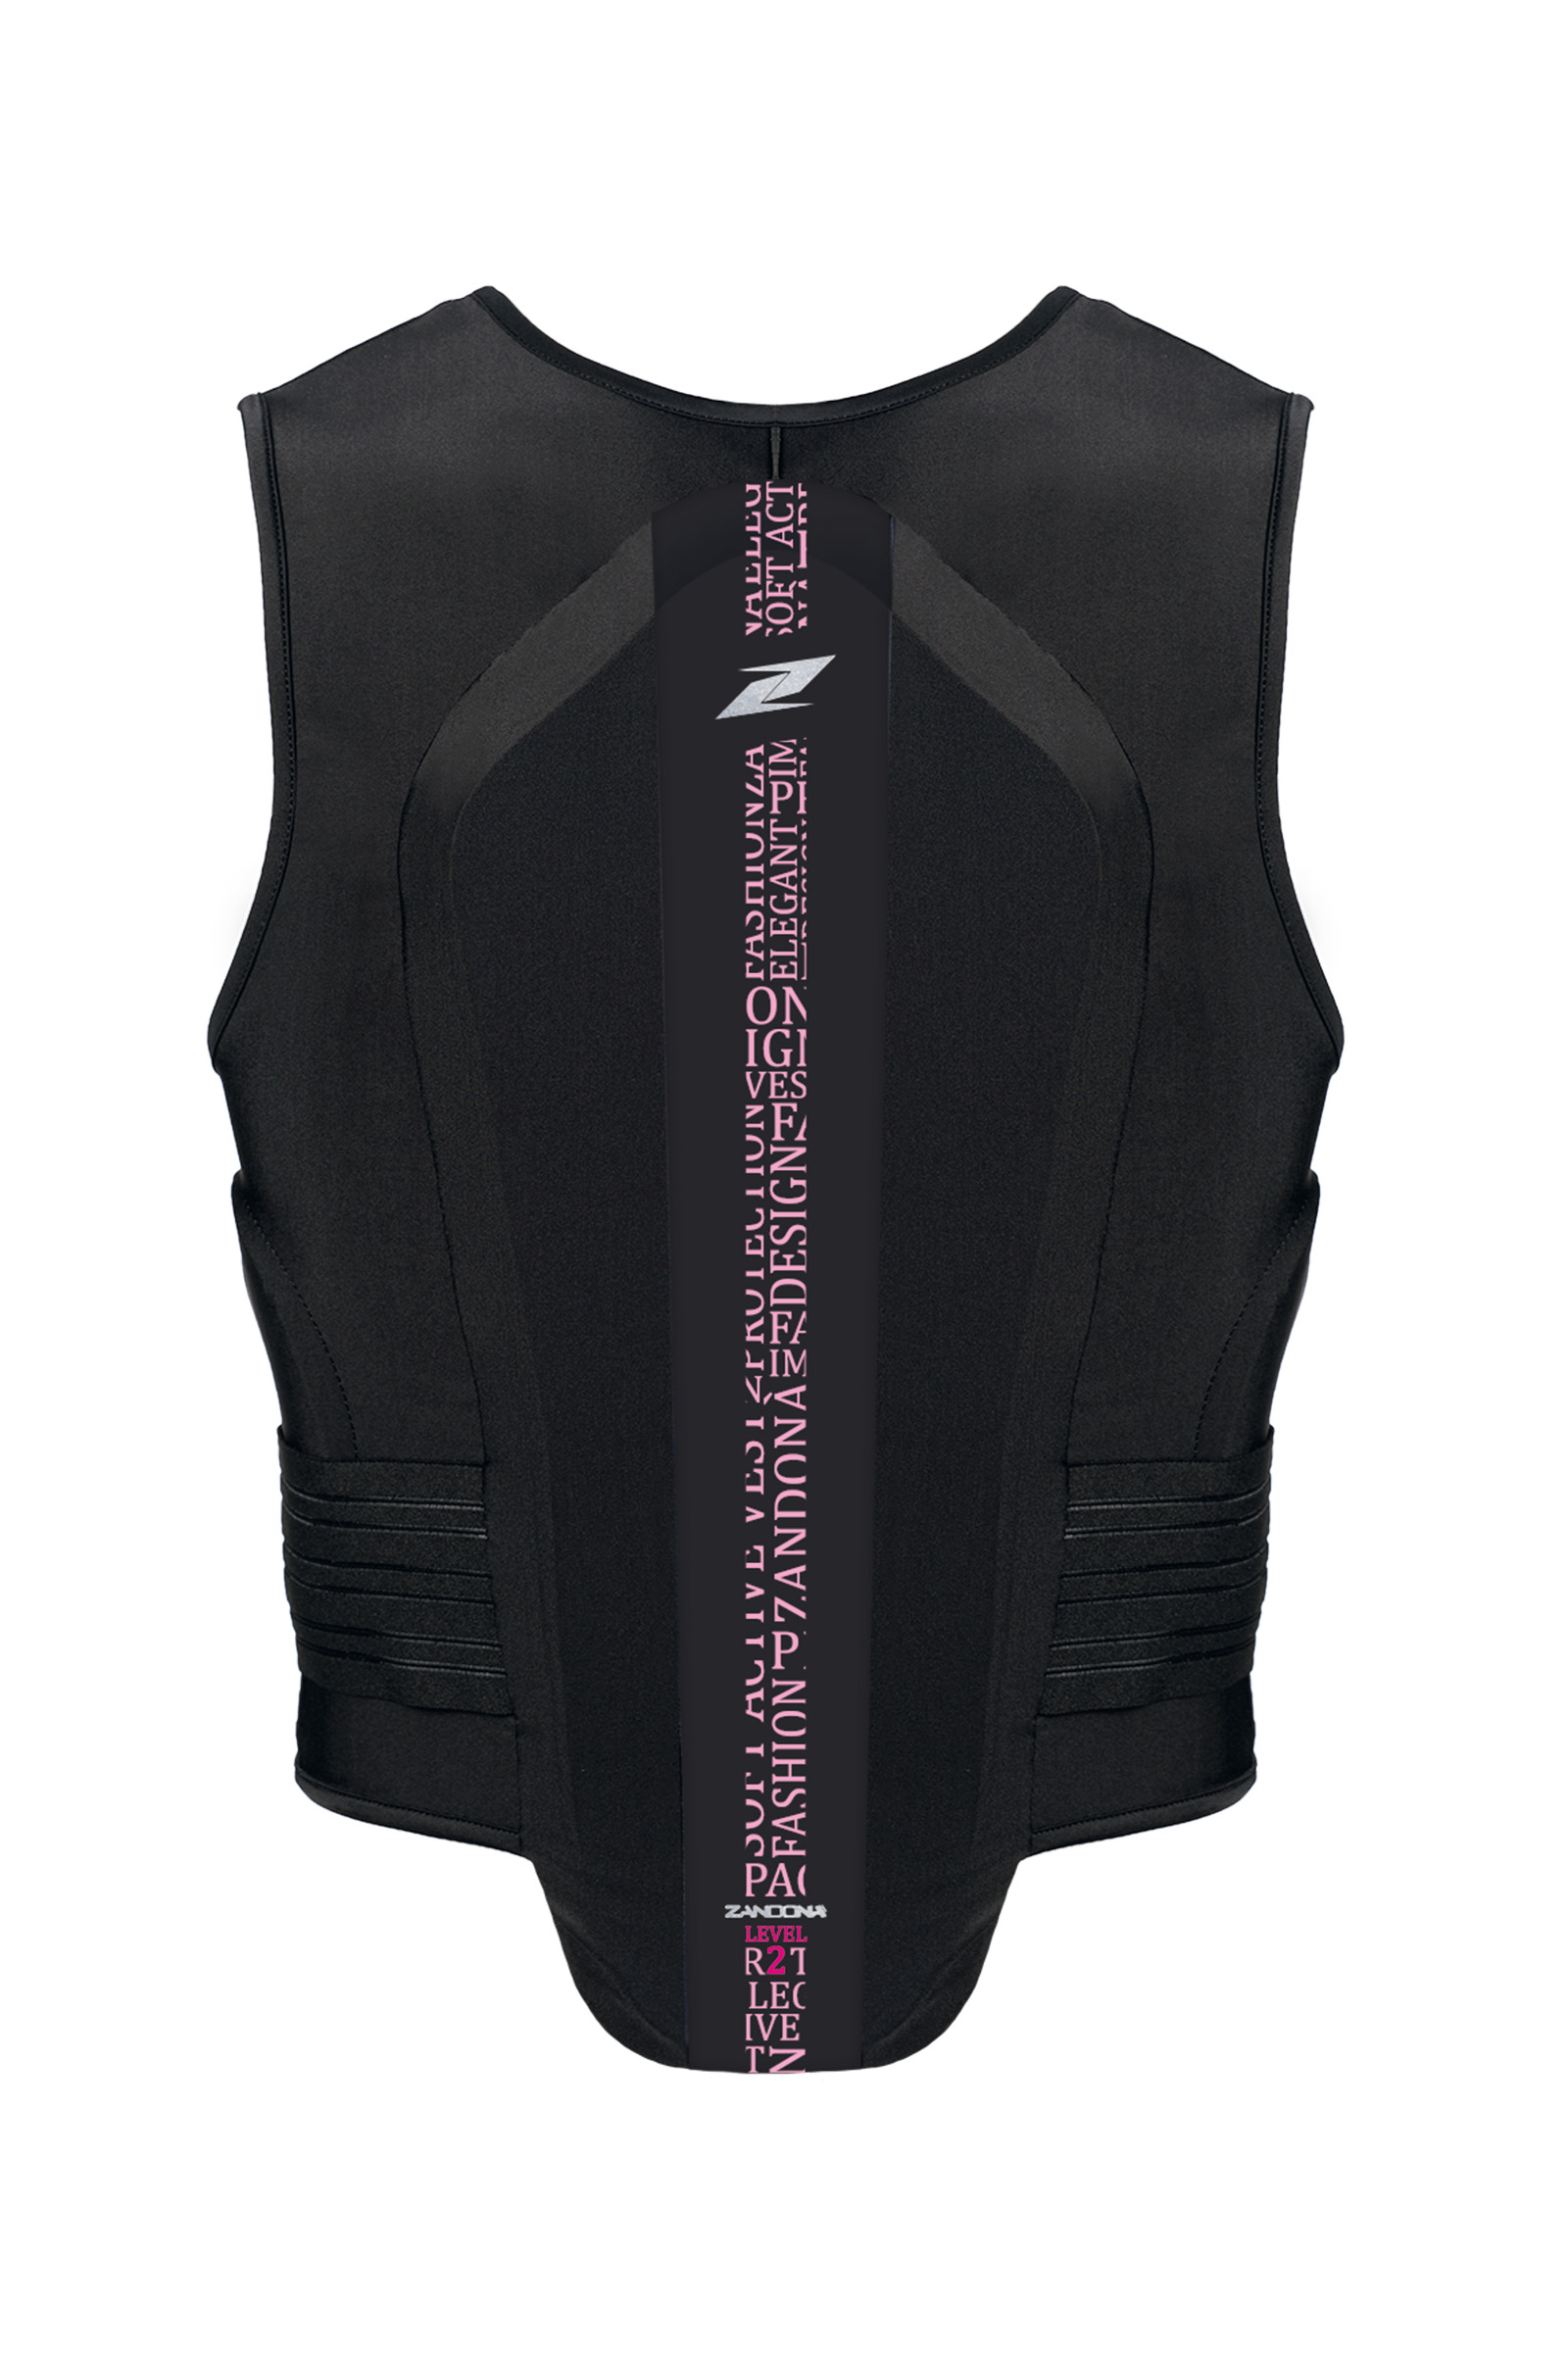 x6 Back Soft Buy (158-167cm) Protector Vest Pro Zandona